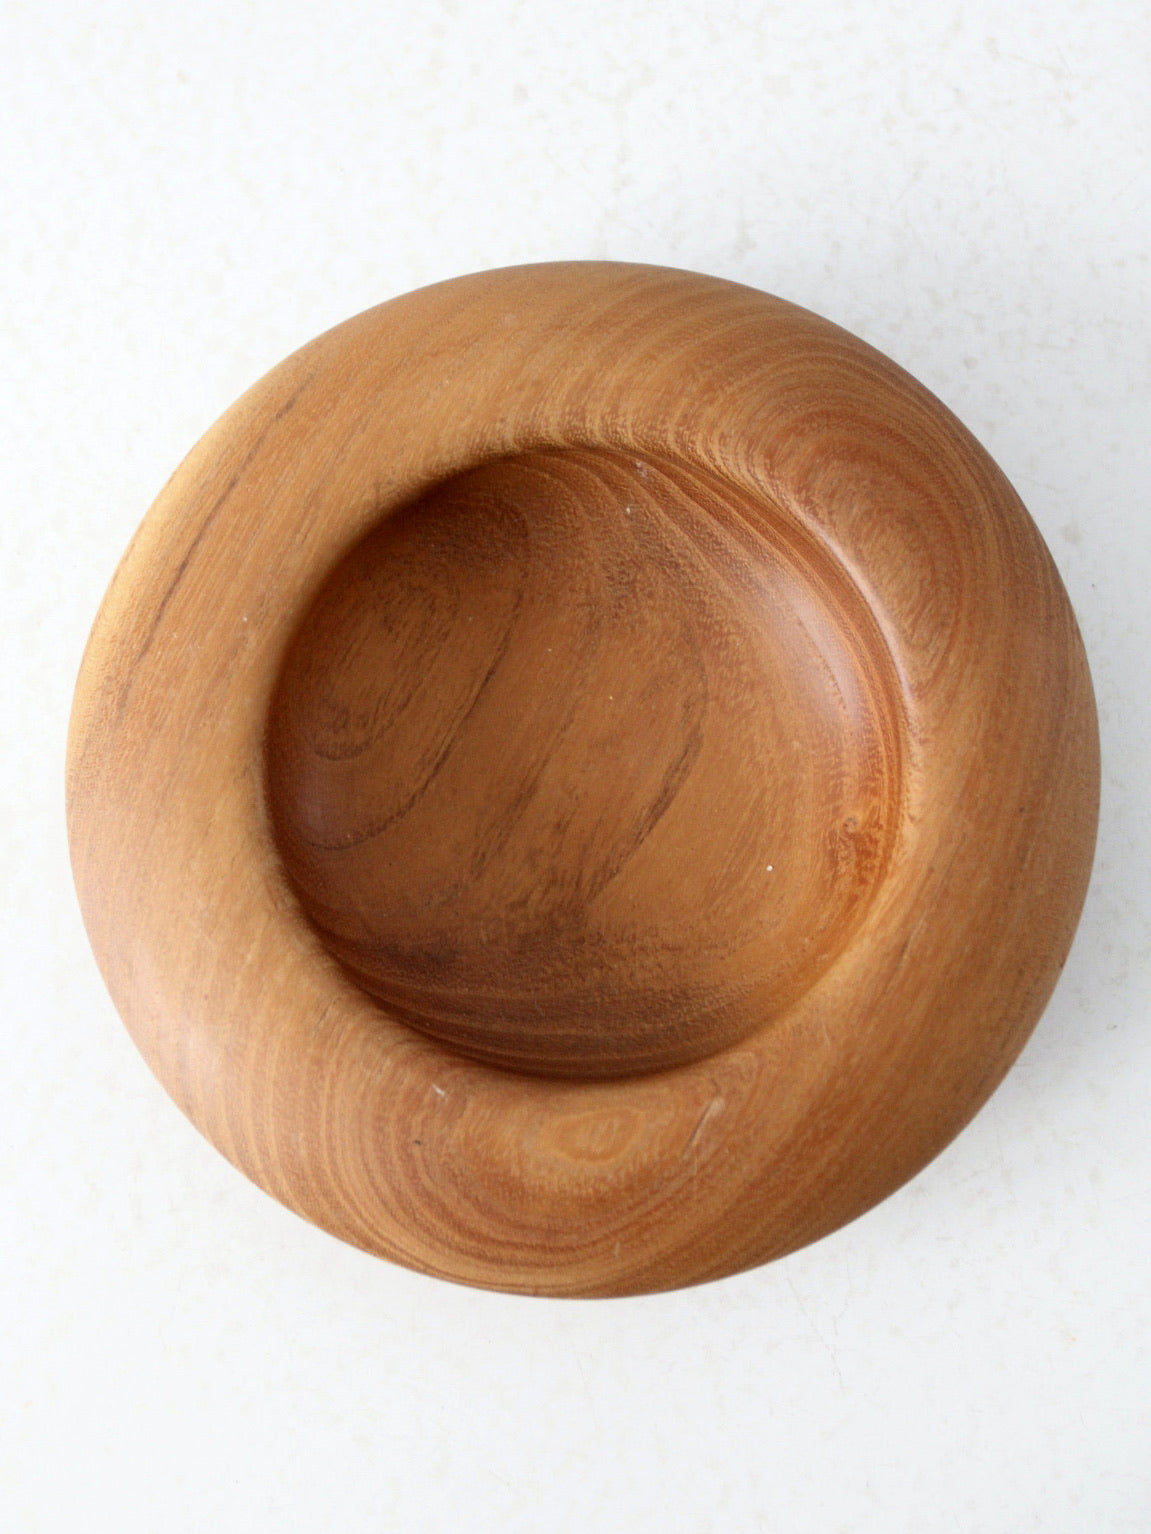 vintage hollow form wood bowl